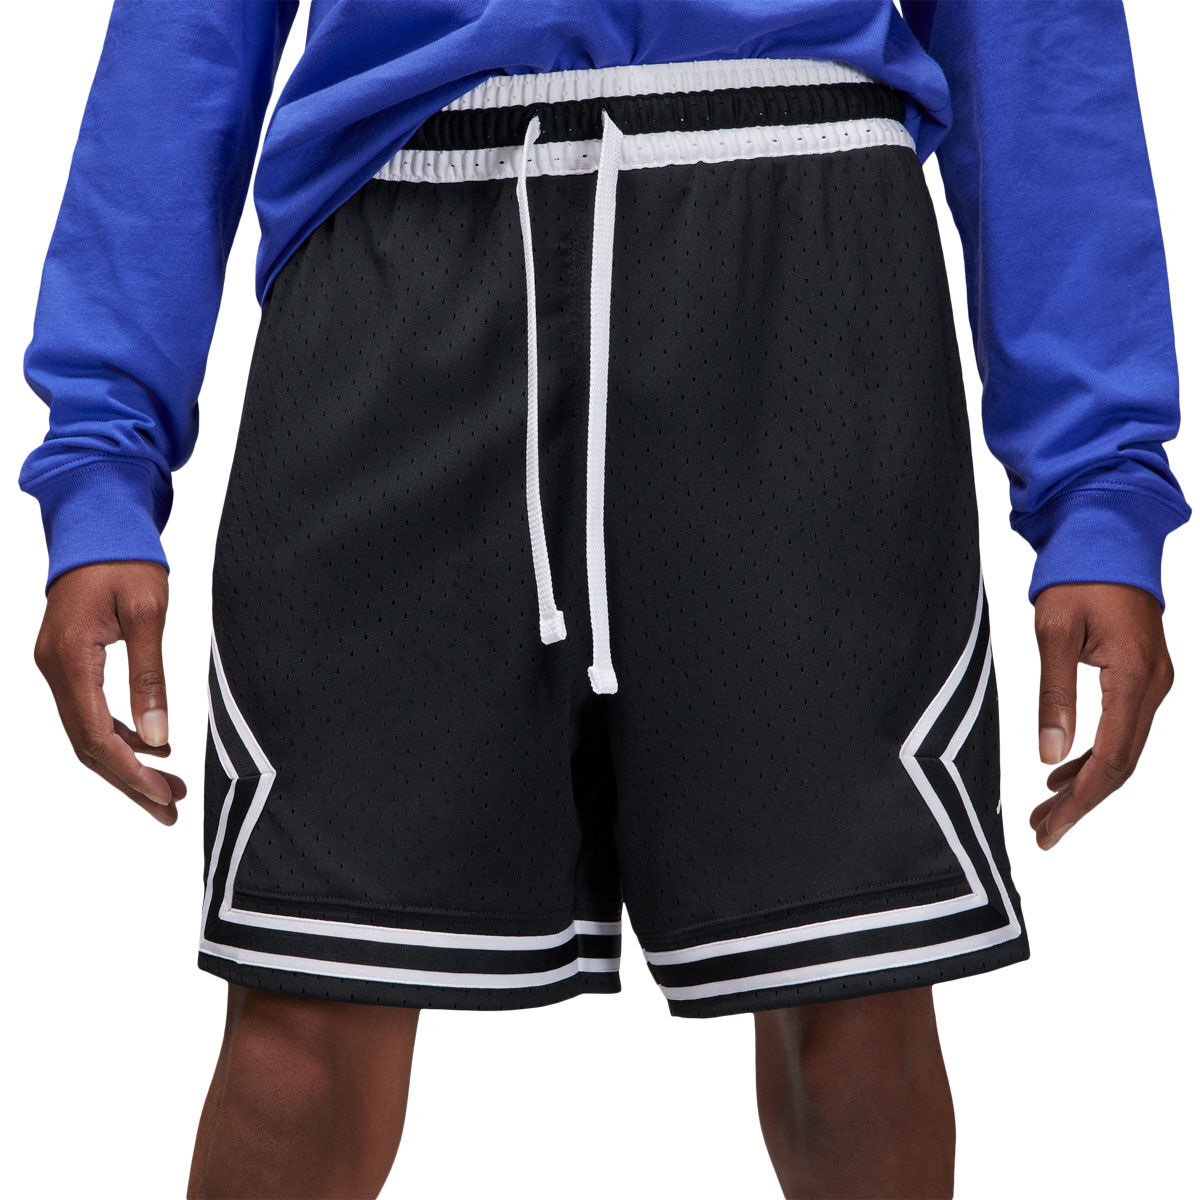 Jordan Men's Dri-Fit Nike AJ All Season Compression Shirt (Black, X-Large)